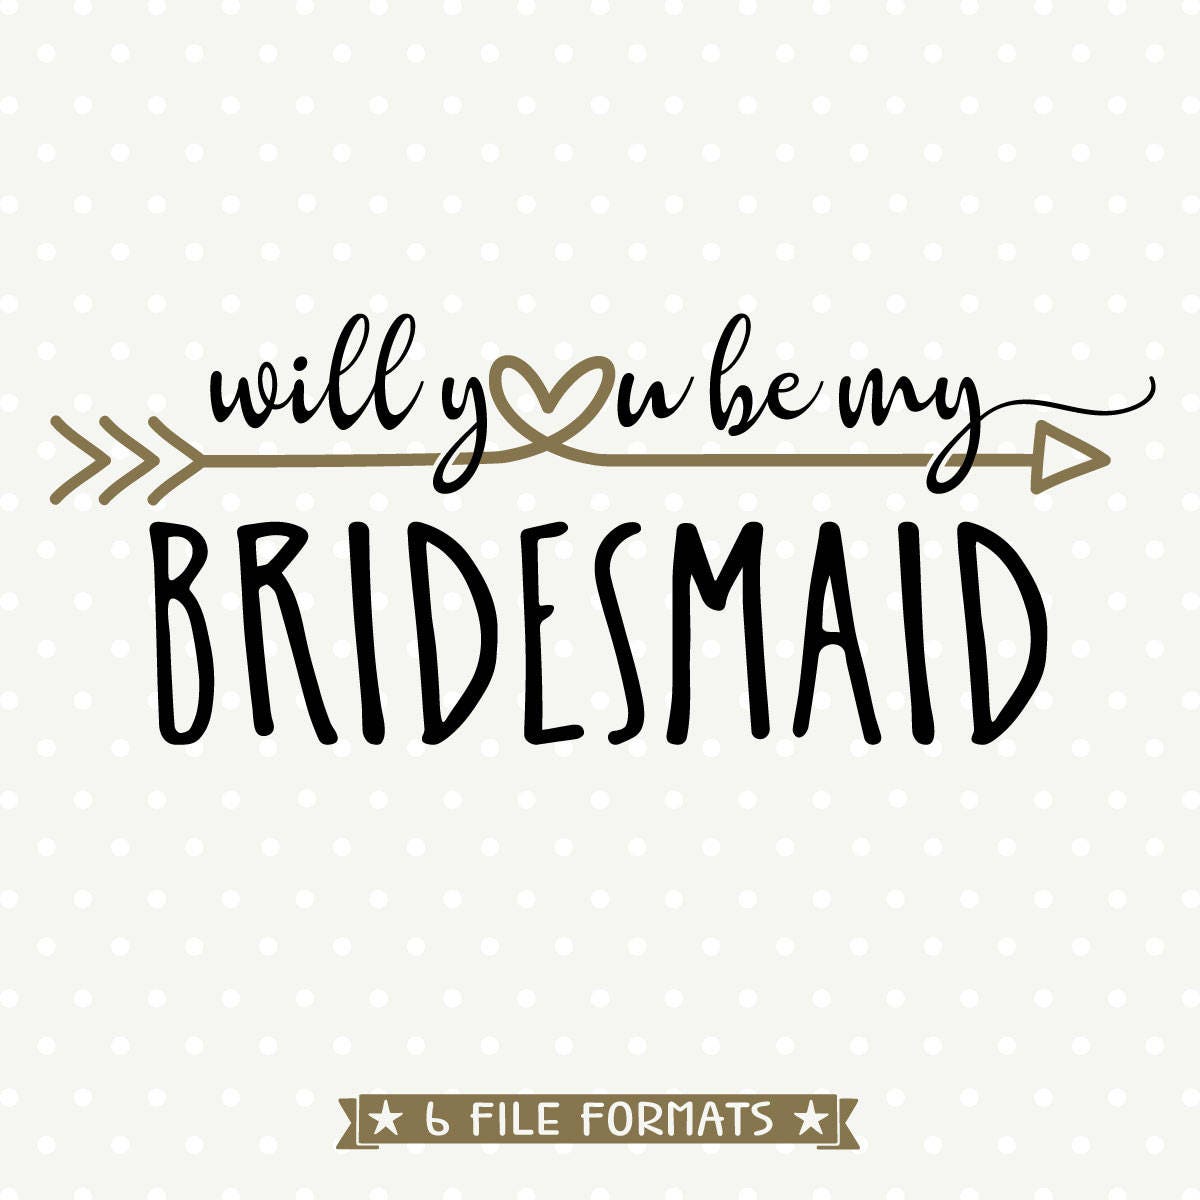 Download Will You Be My Bridesmaid SVG DIY Bridal Party DIY